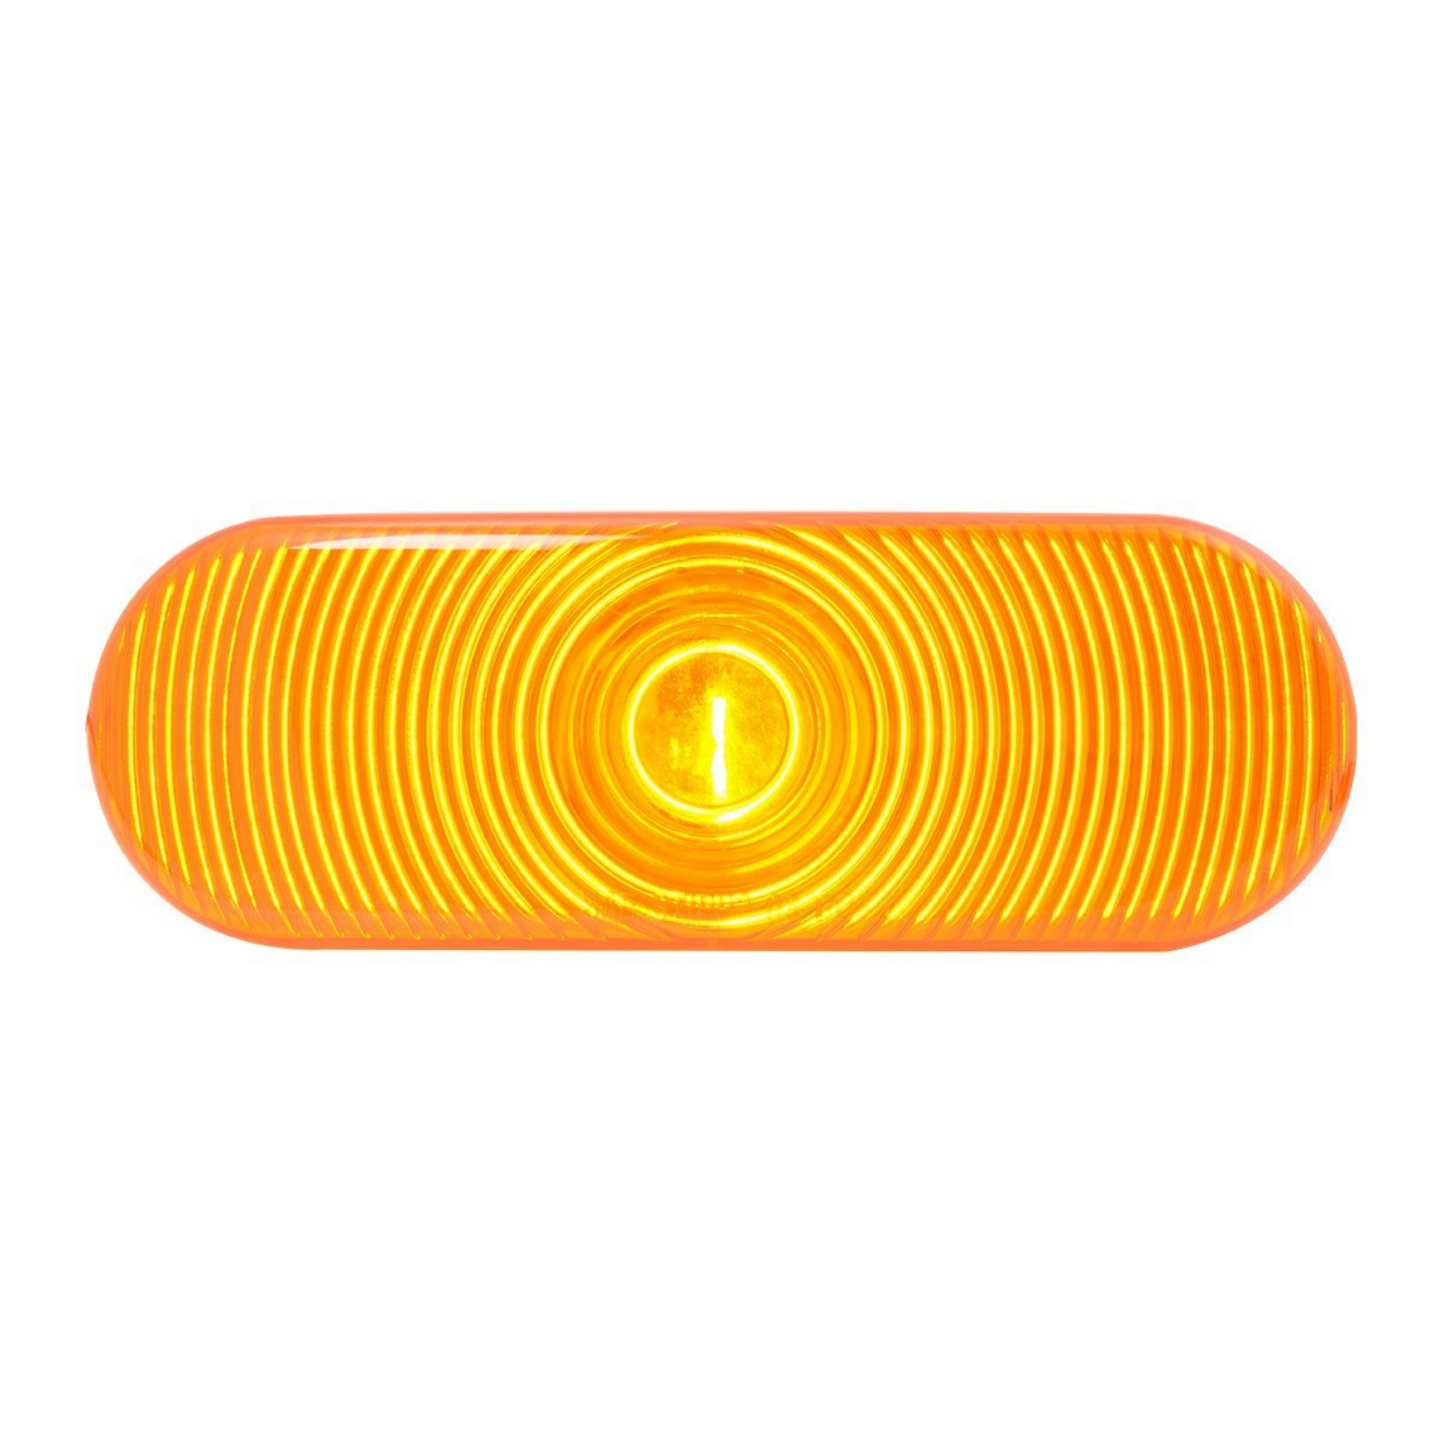 Oval LED Light in Amber